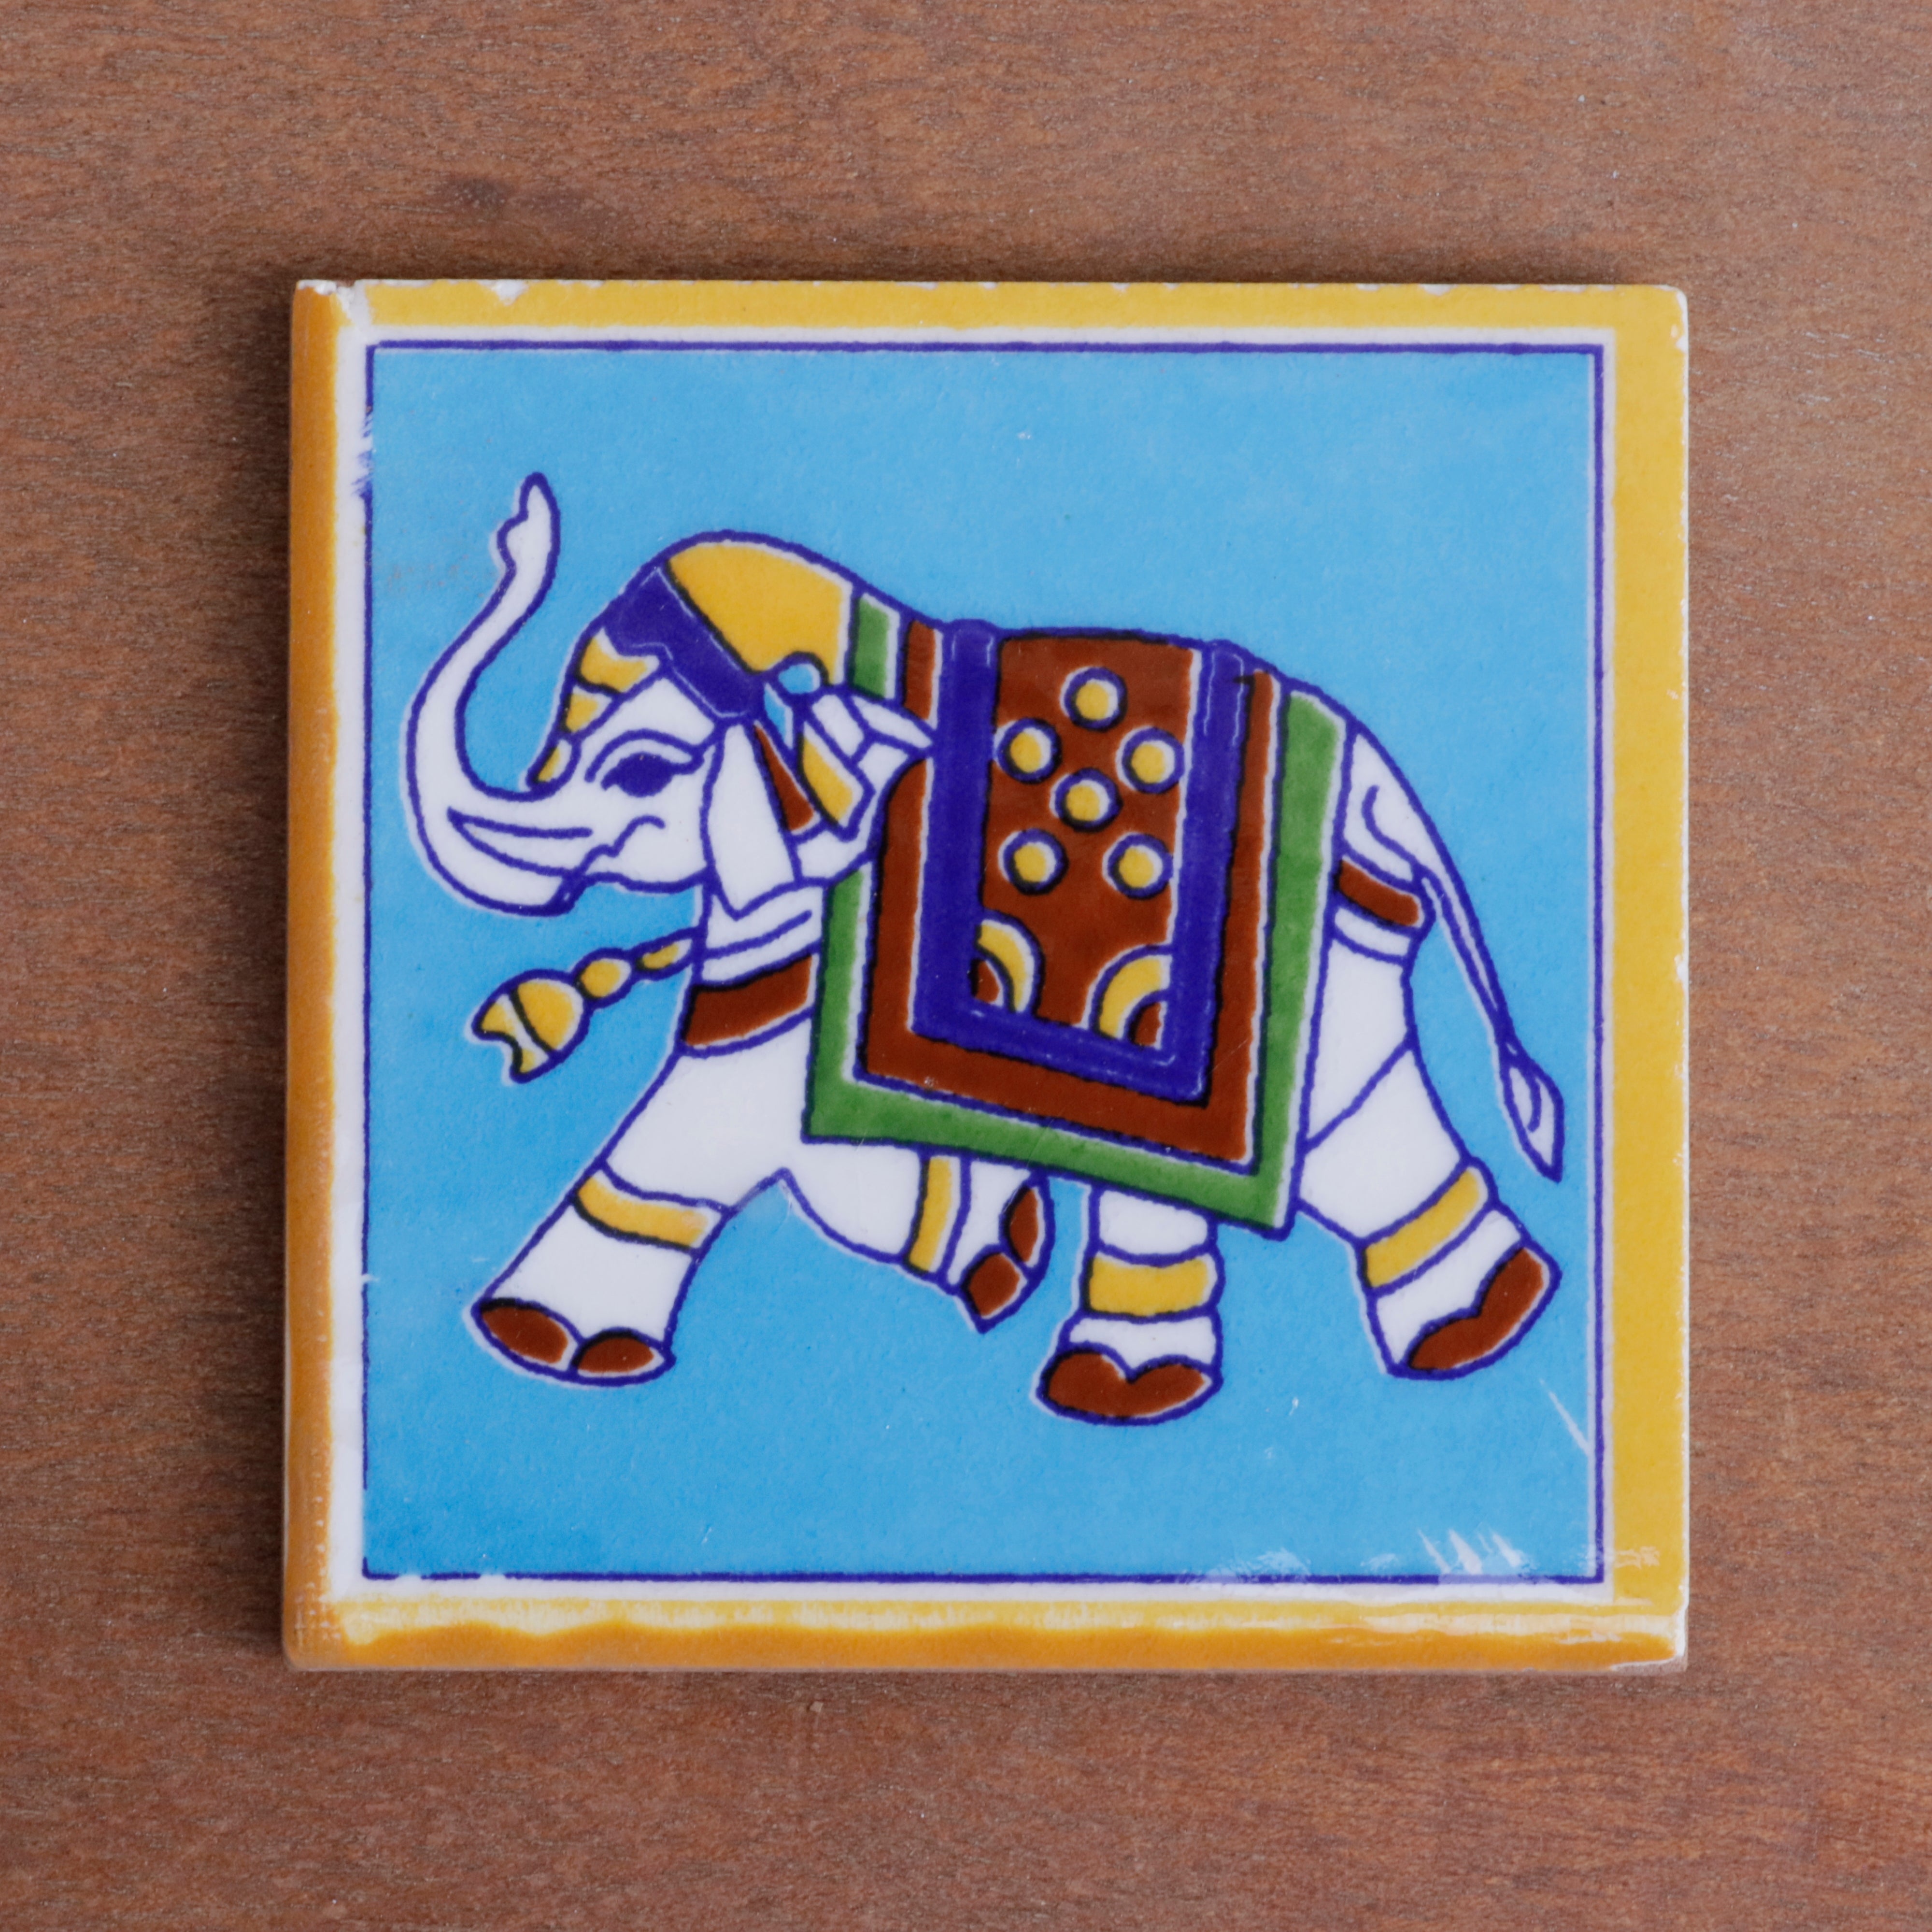 Erotic Traditional Style Elephant Designed Ceramic Square Tile Set of 2 Ceramic Tile